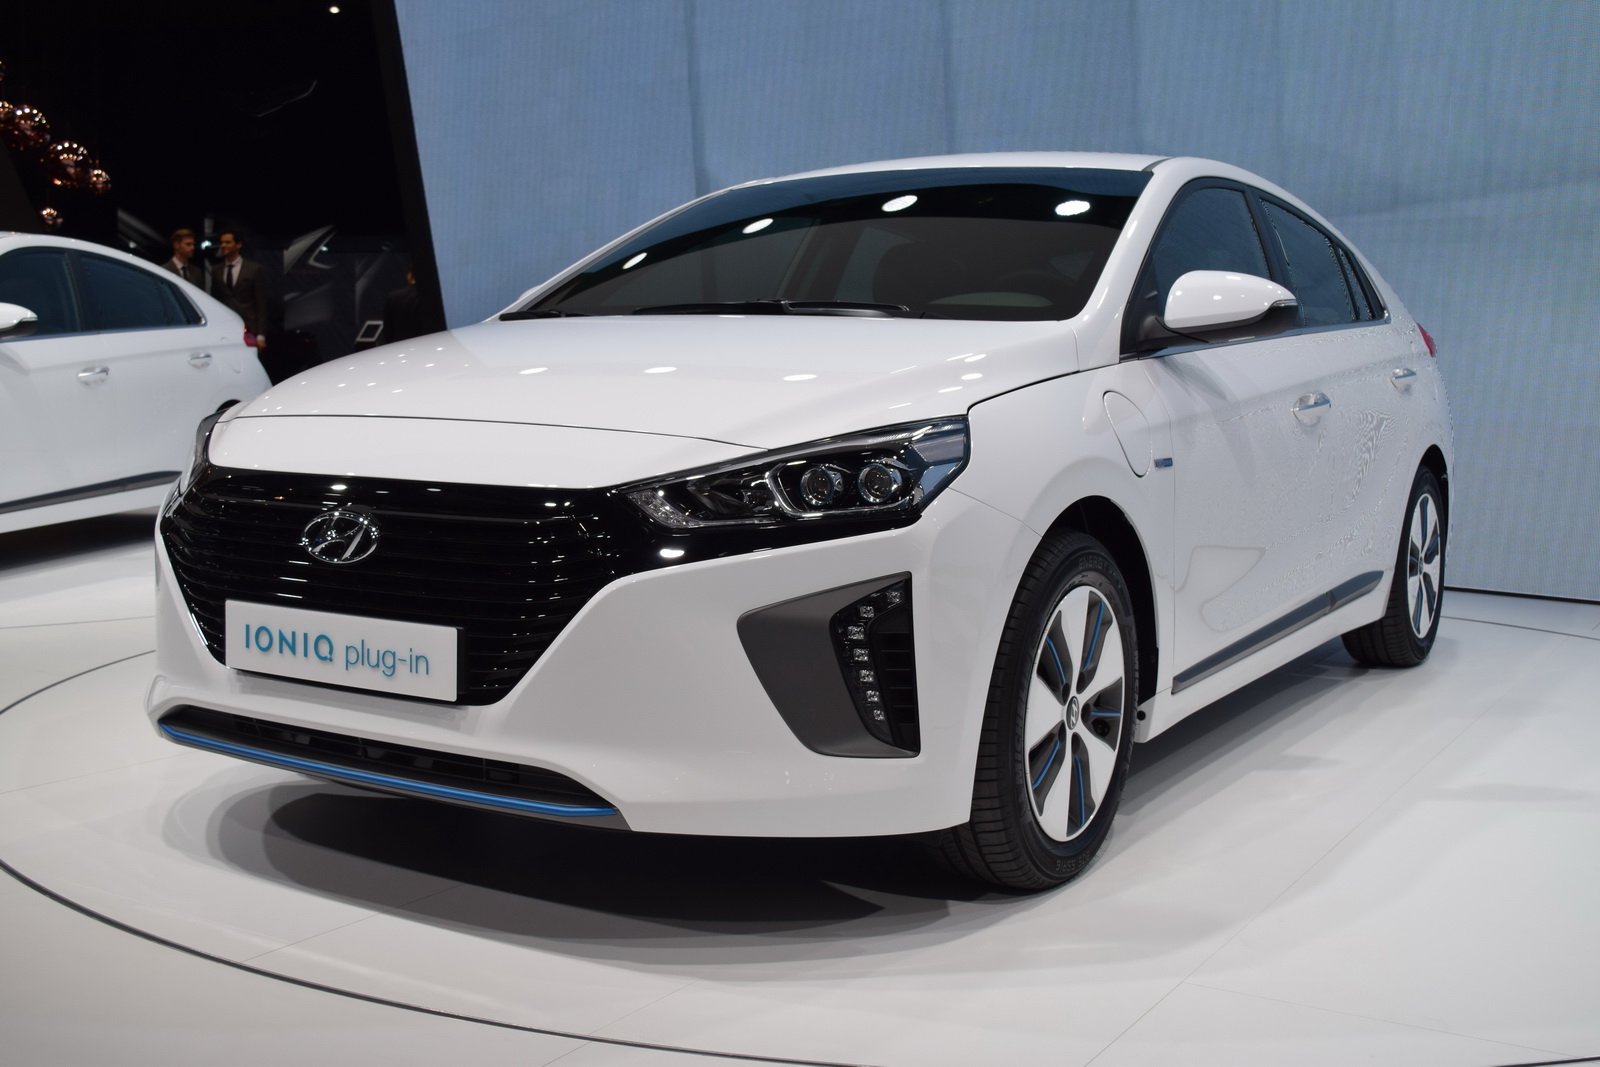 Hyundai Showcases All Three Ioniq Models In Geneva | Carscoops1600 x 1067